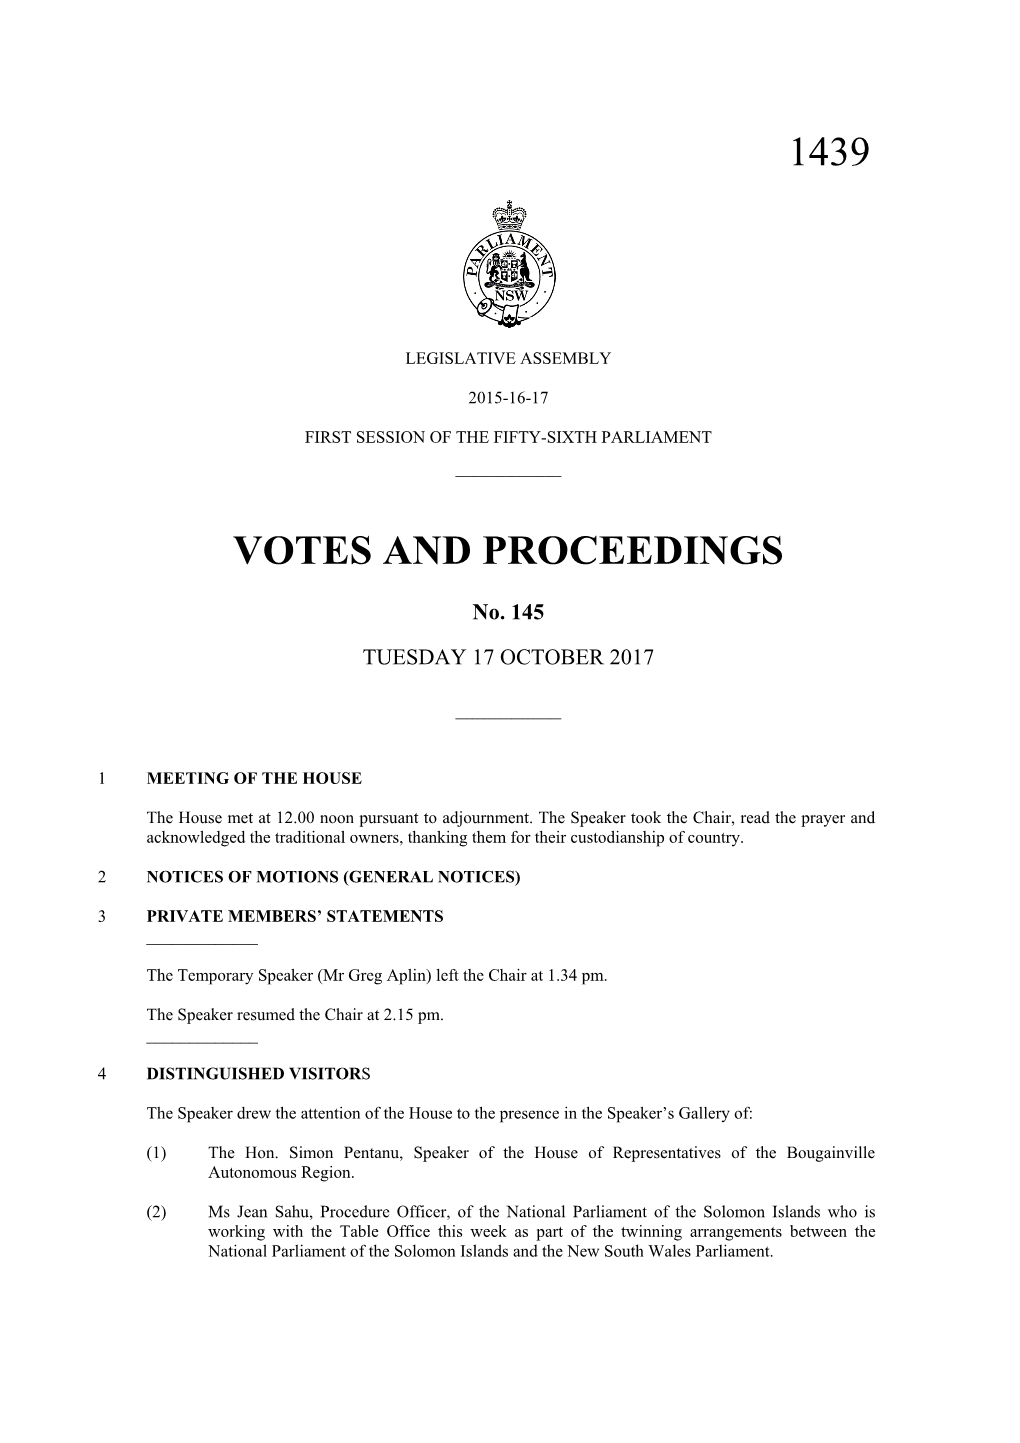 1439 Votes and Proceedings